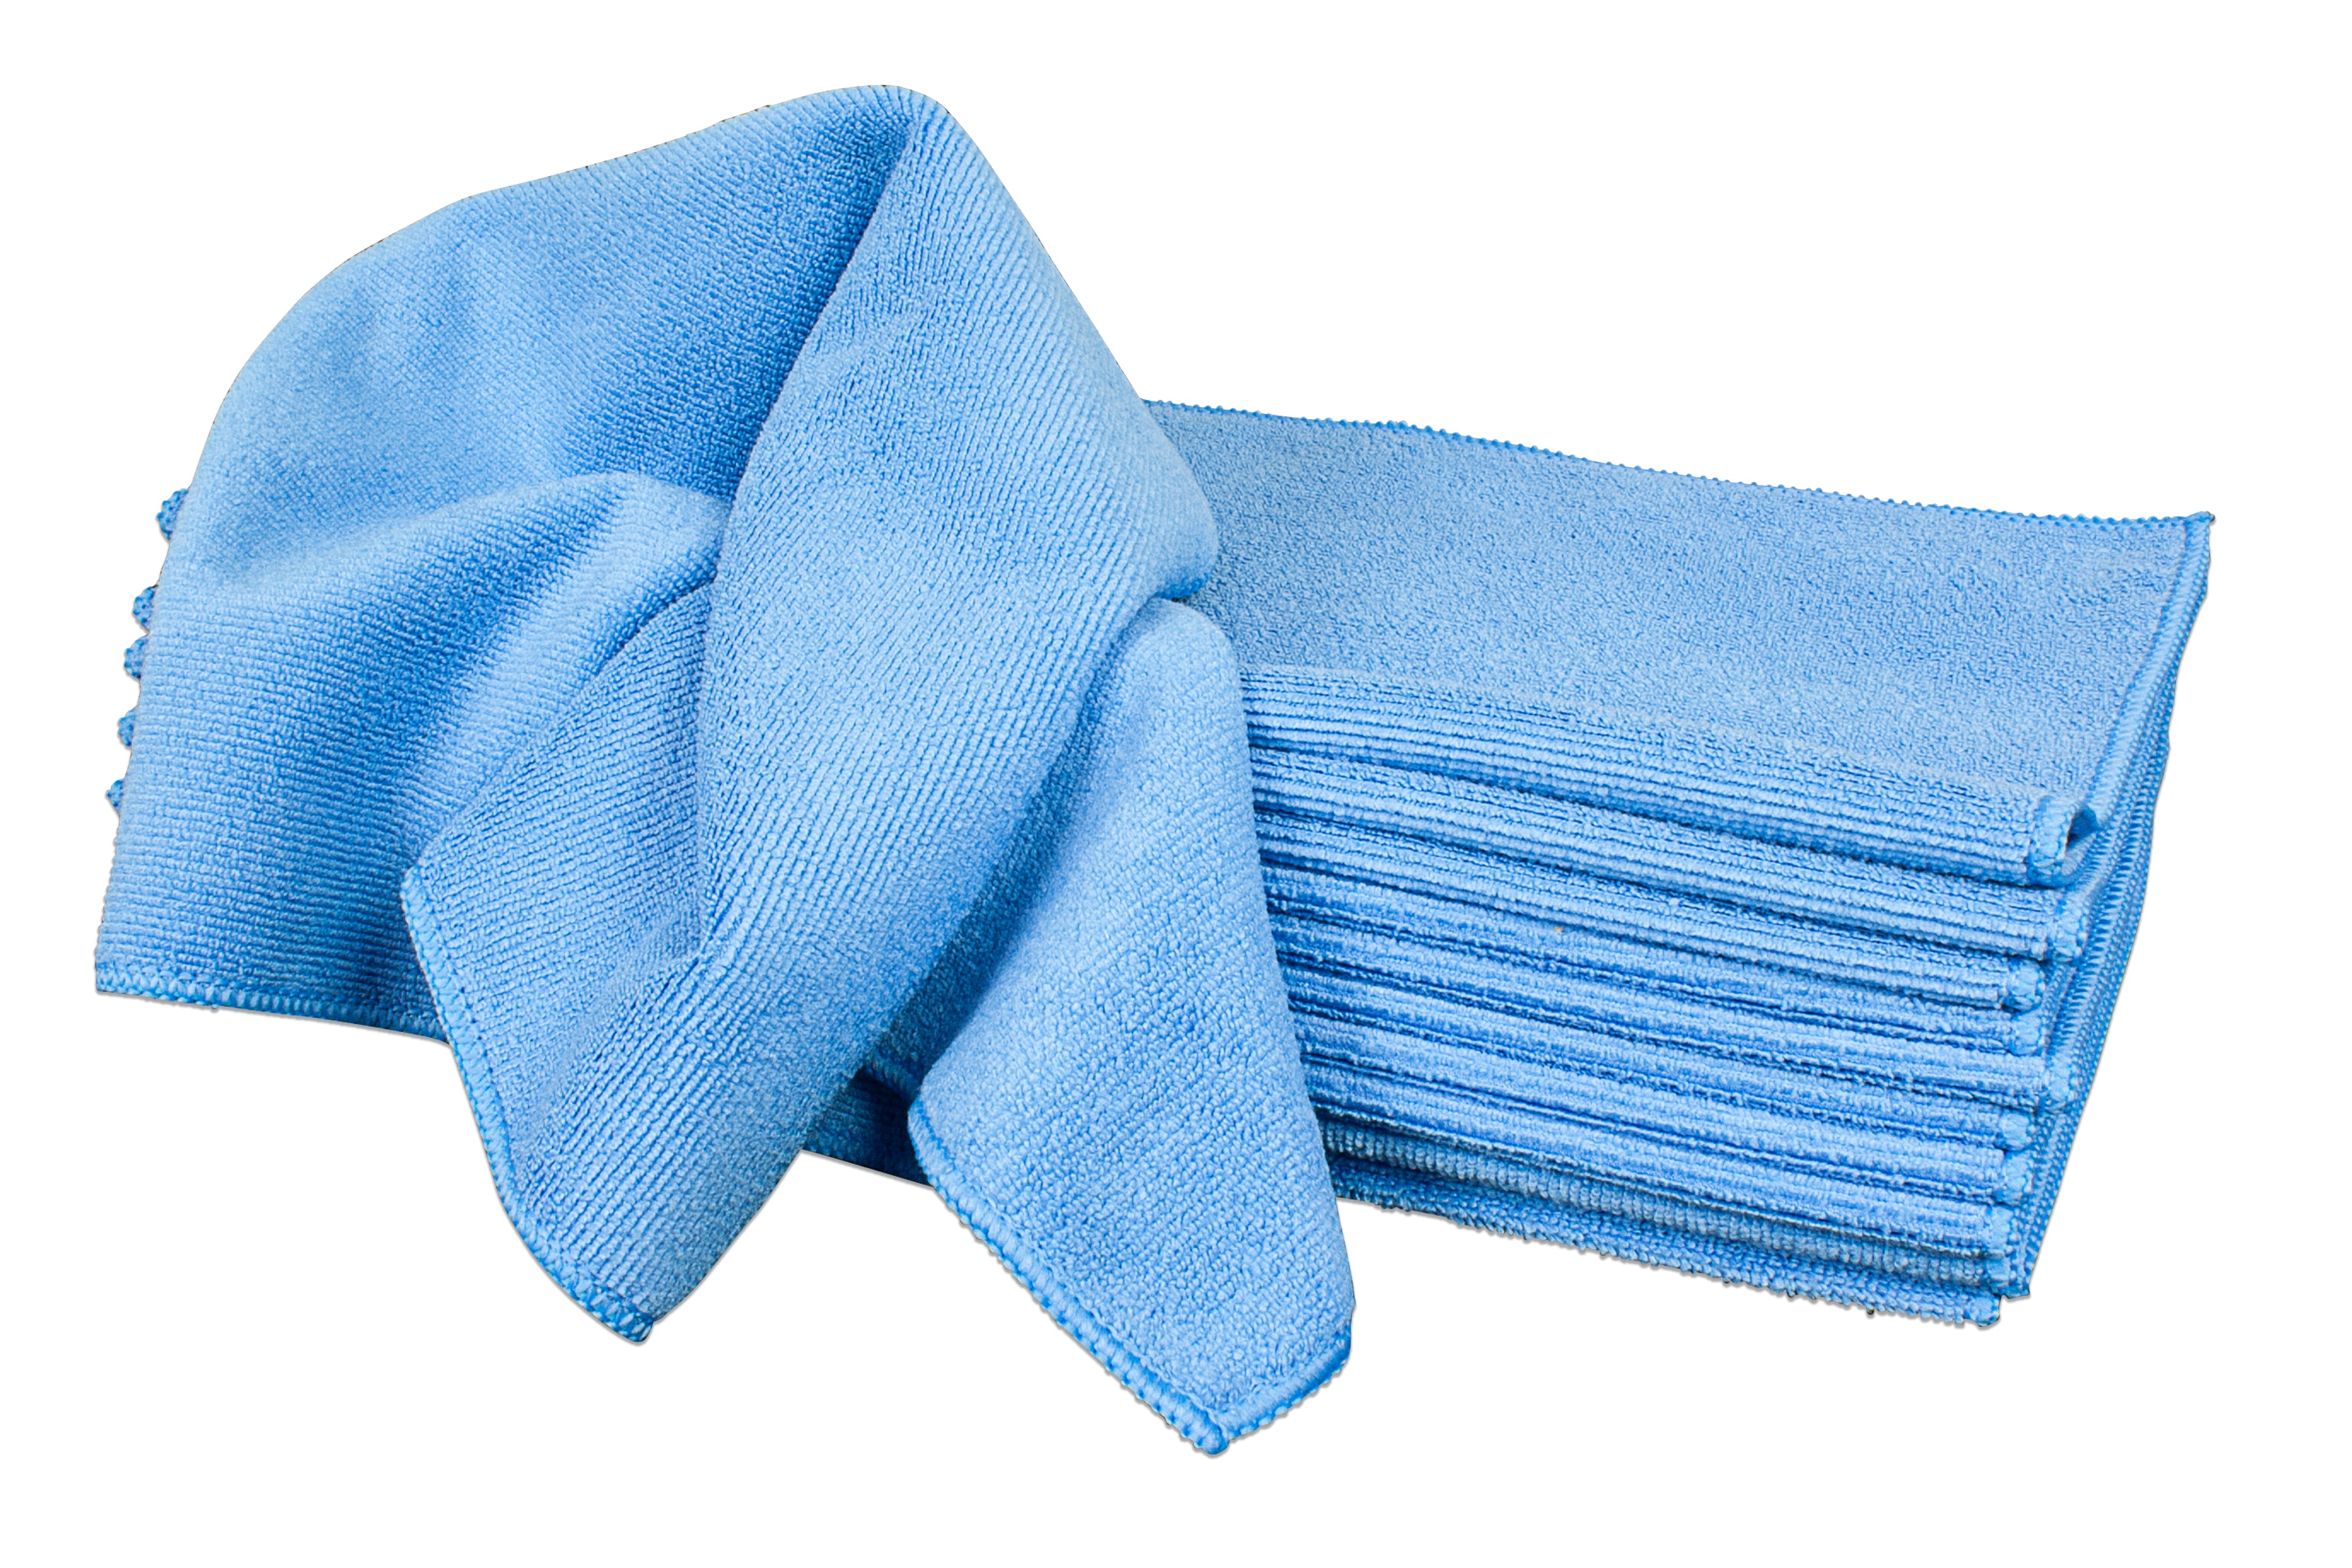 Using Microfiber Towels To Clean